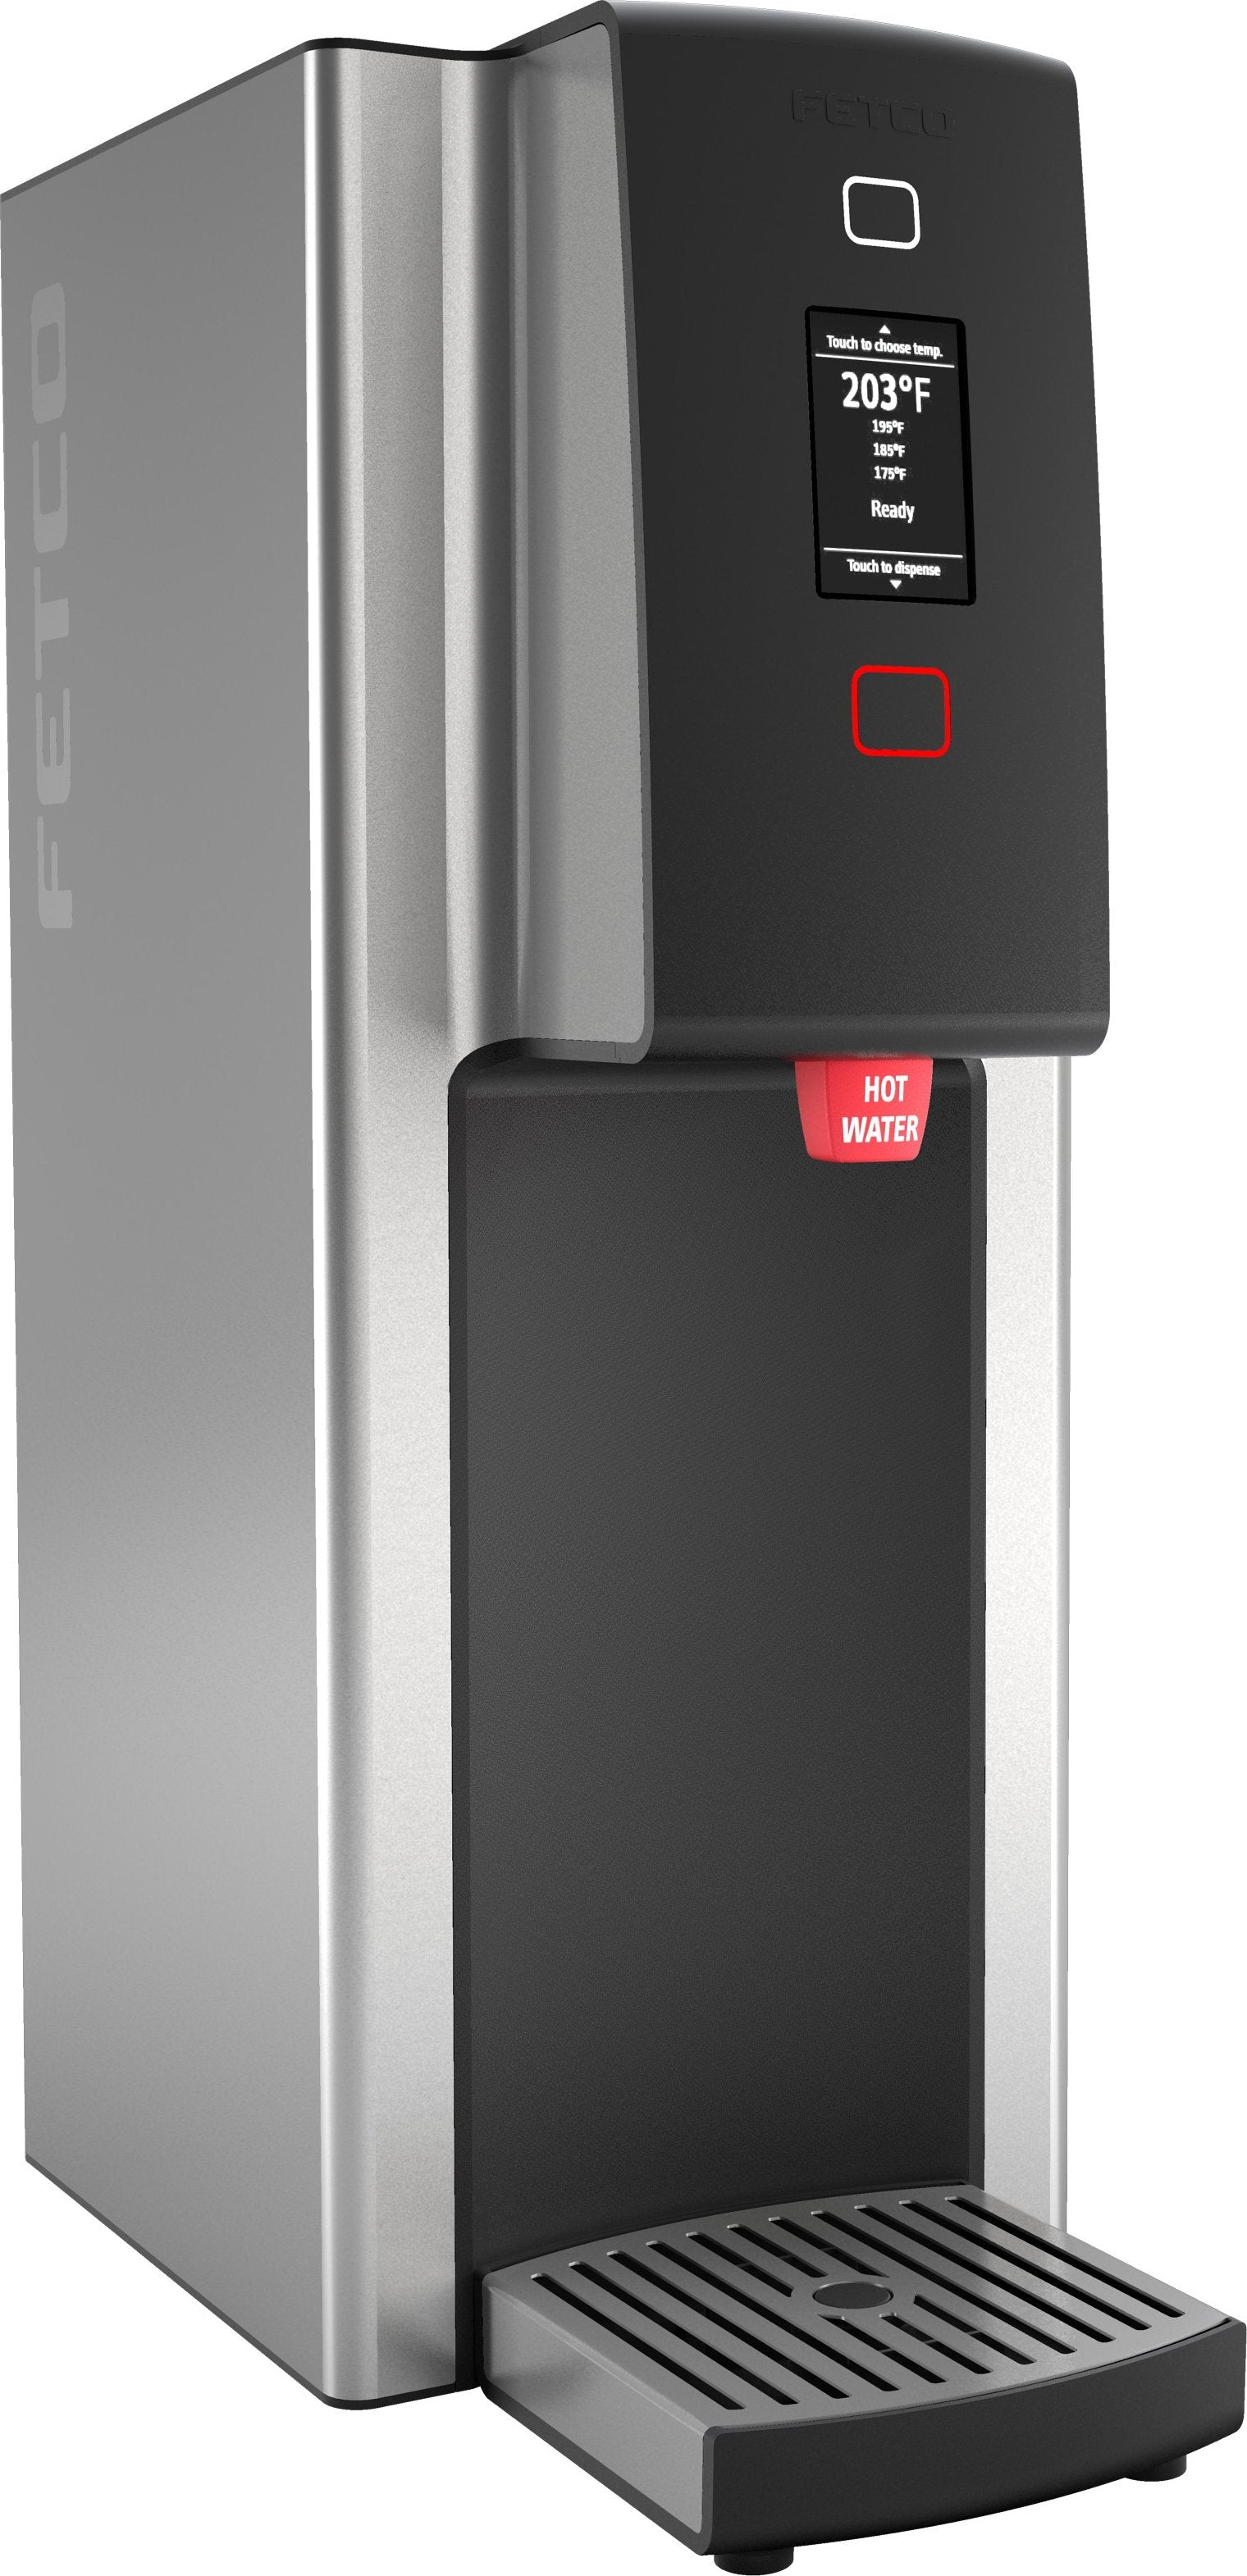 Fetco HWD-2105TOD (H210520) Hot Water Dispenser 5 Gallon (4)